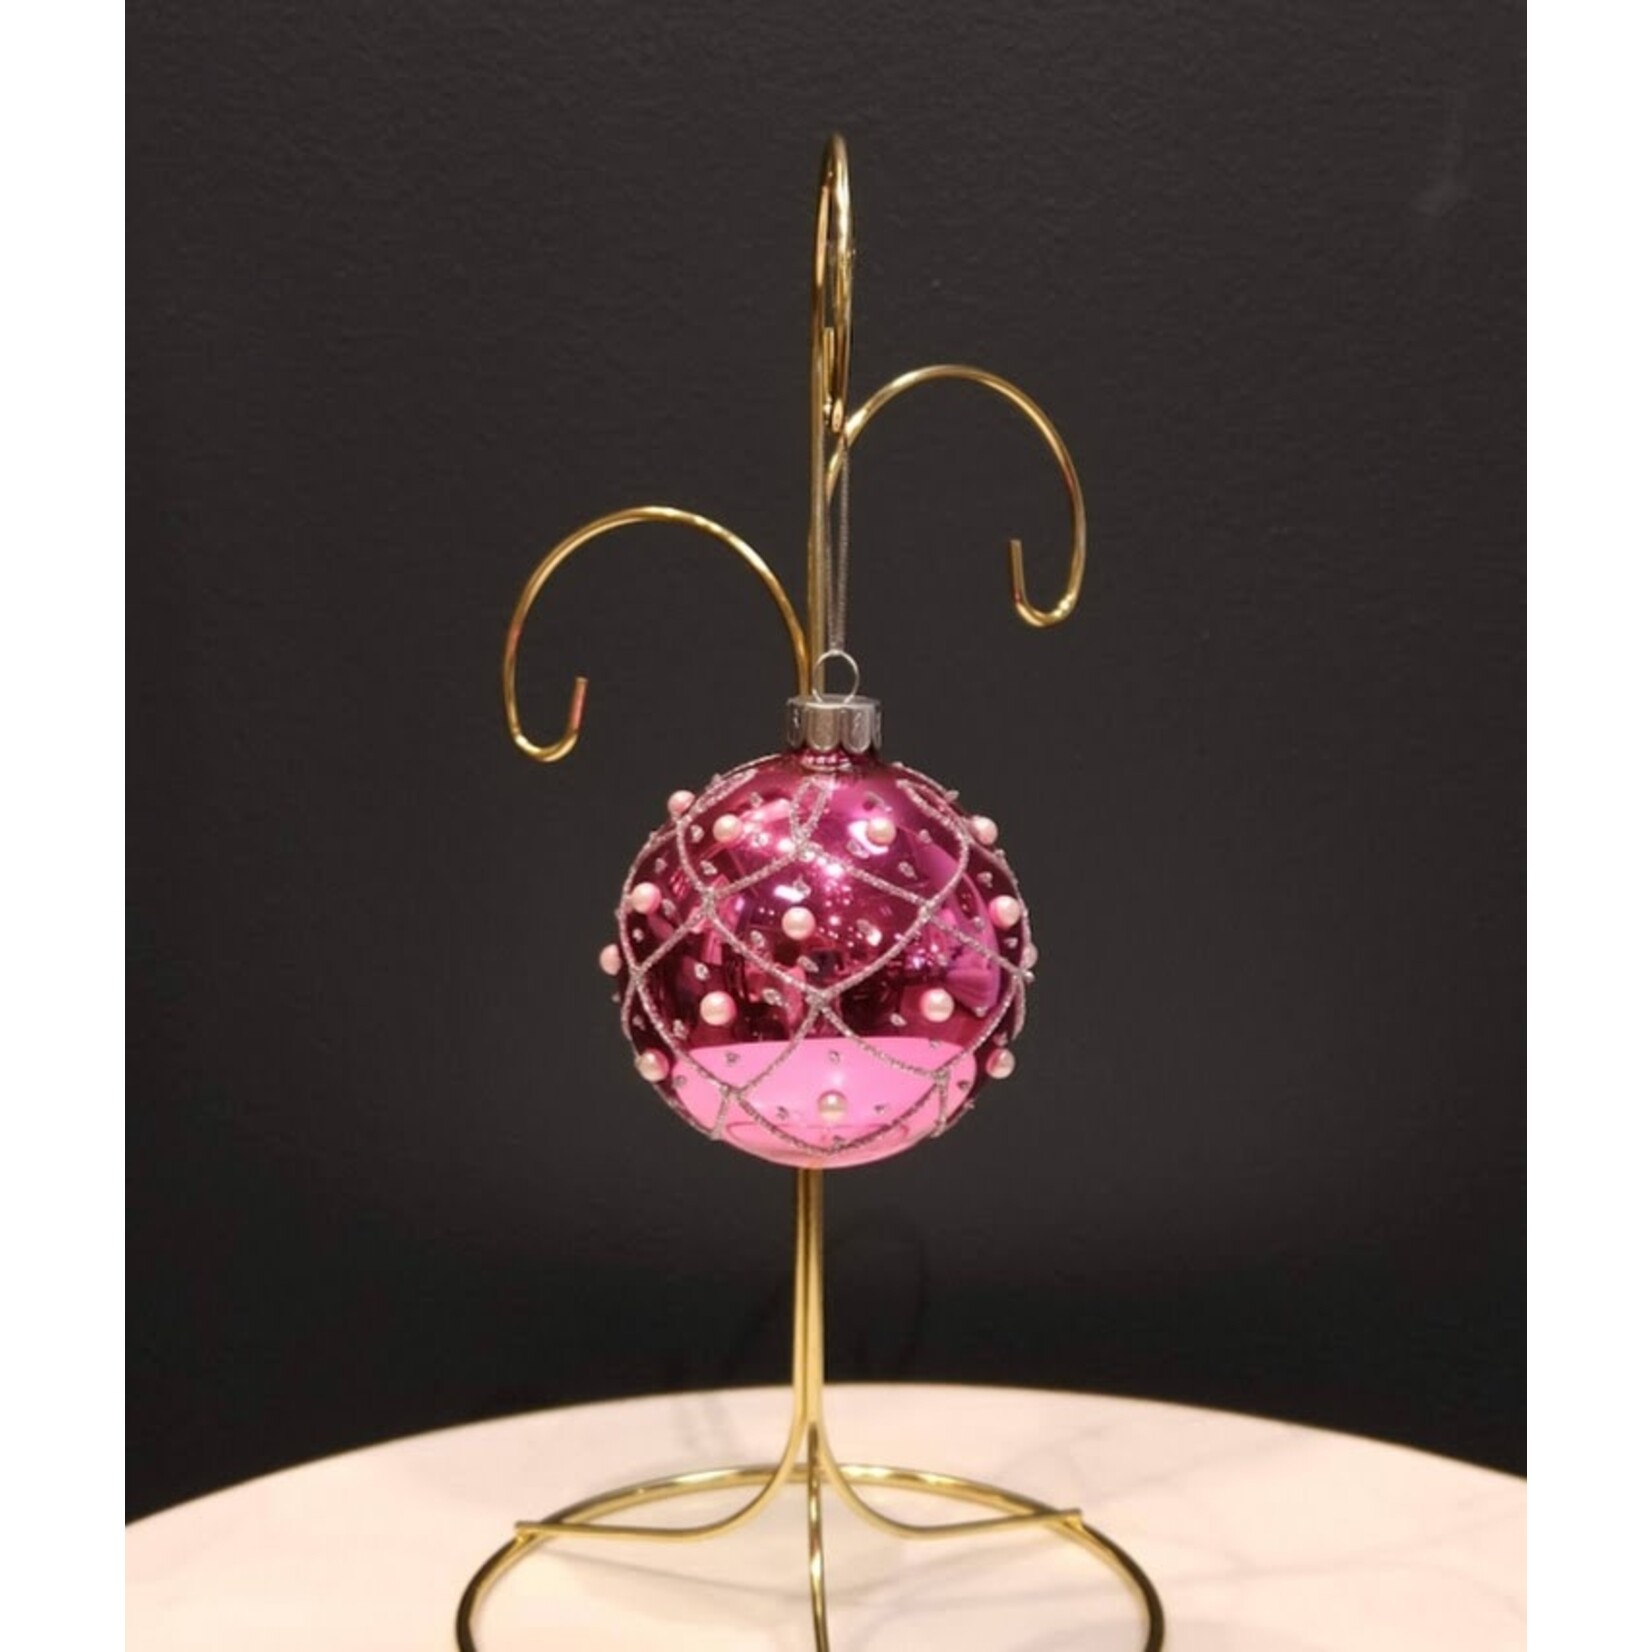 Two's Company Pink Ornament Medium